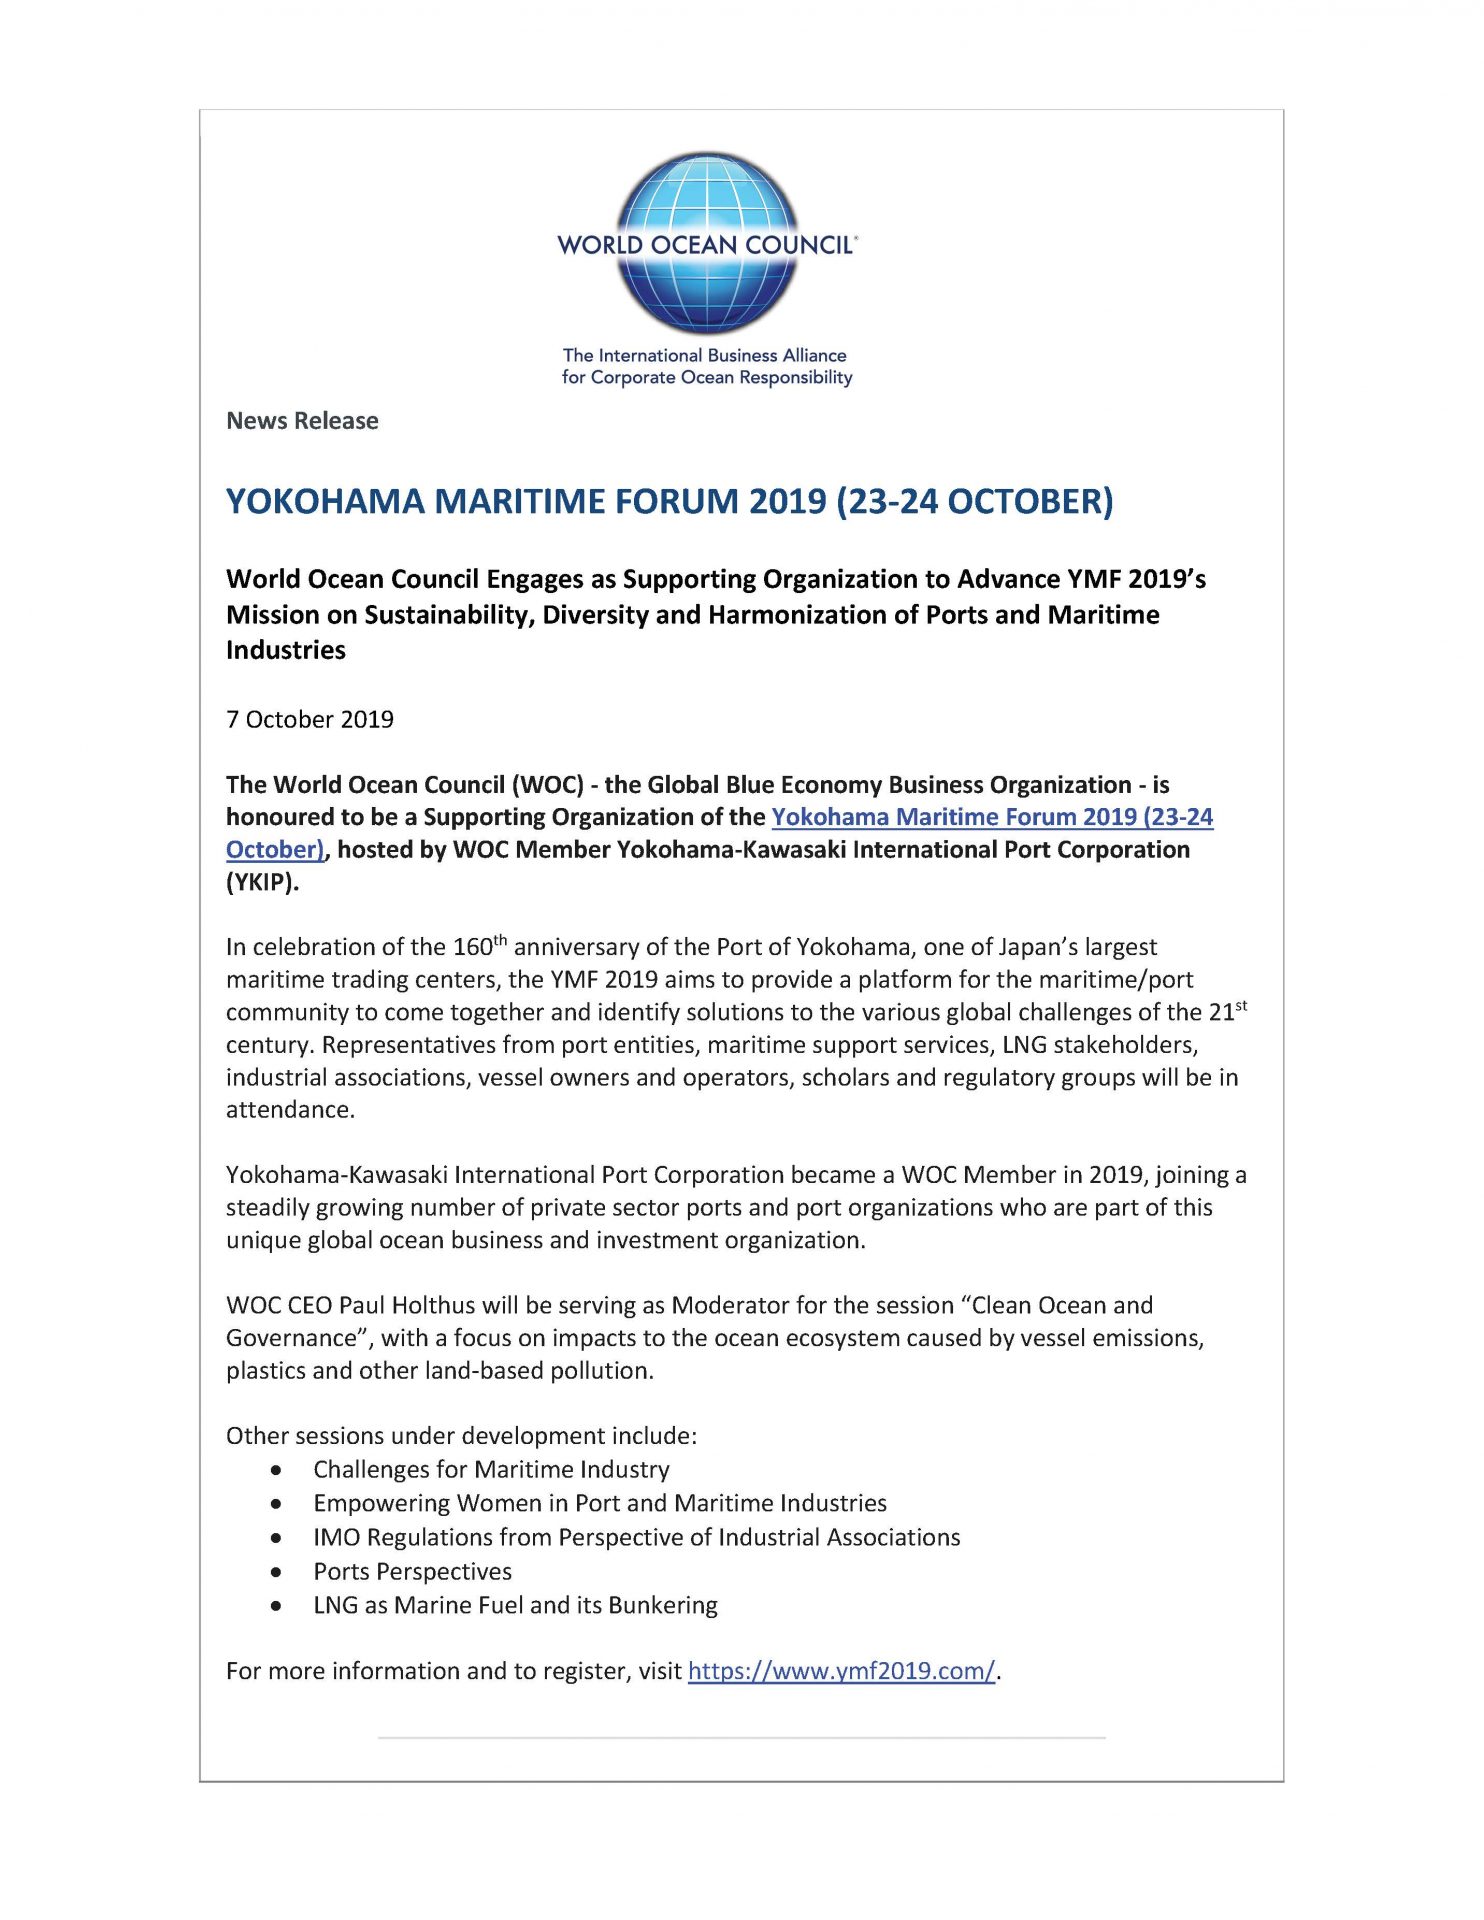 Yokohama Maritime Forum 2019 (23-24 October) - 7 October 2019